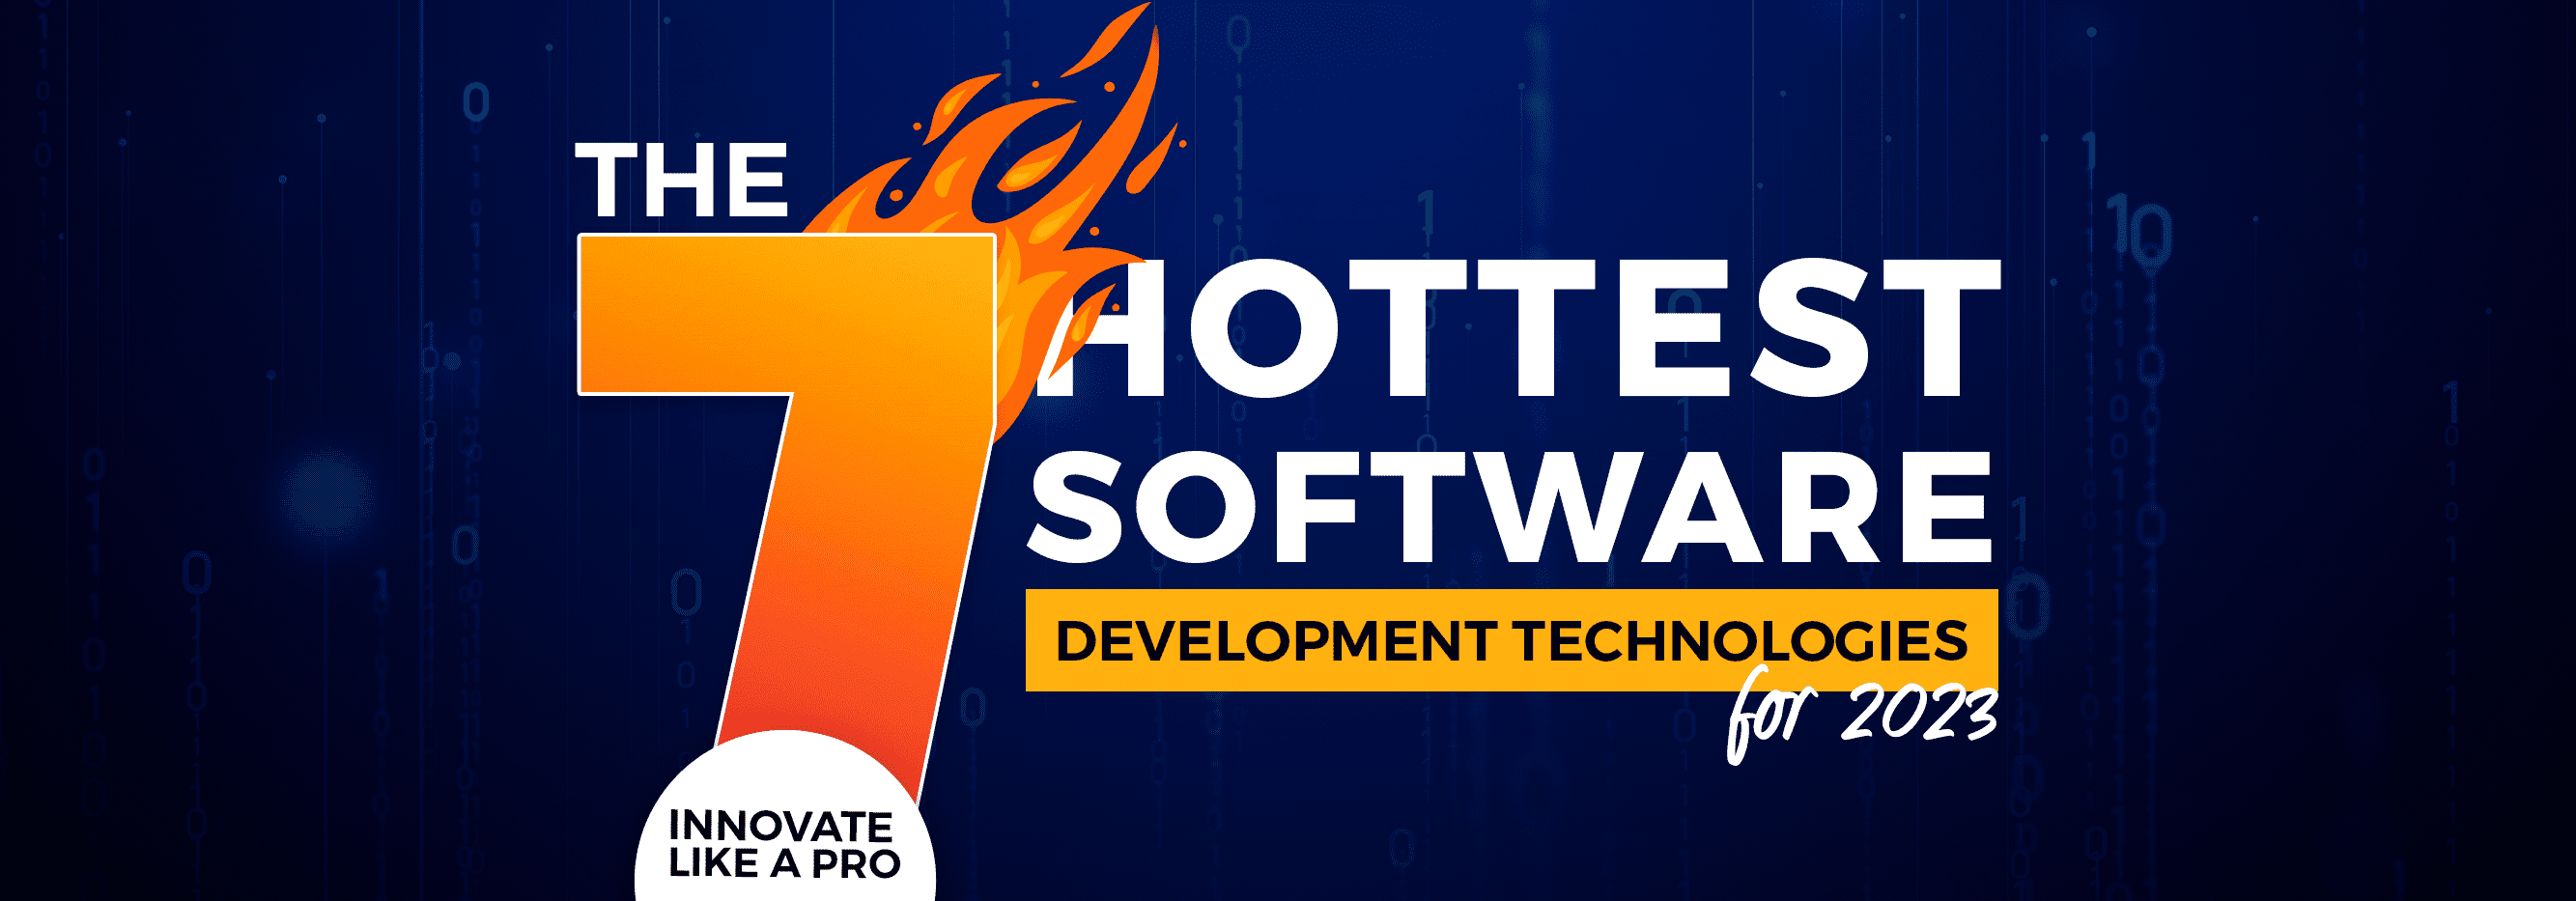 Trending Software Development Technologies